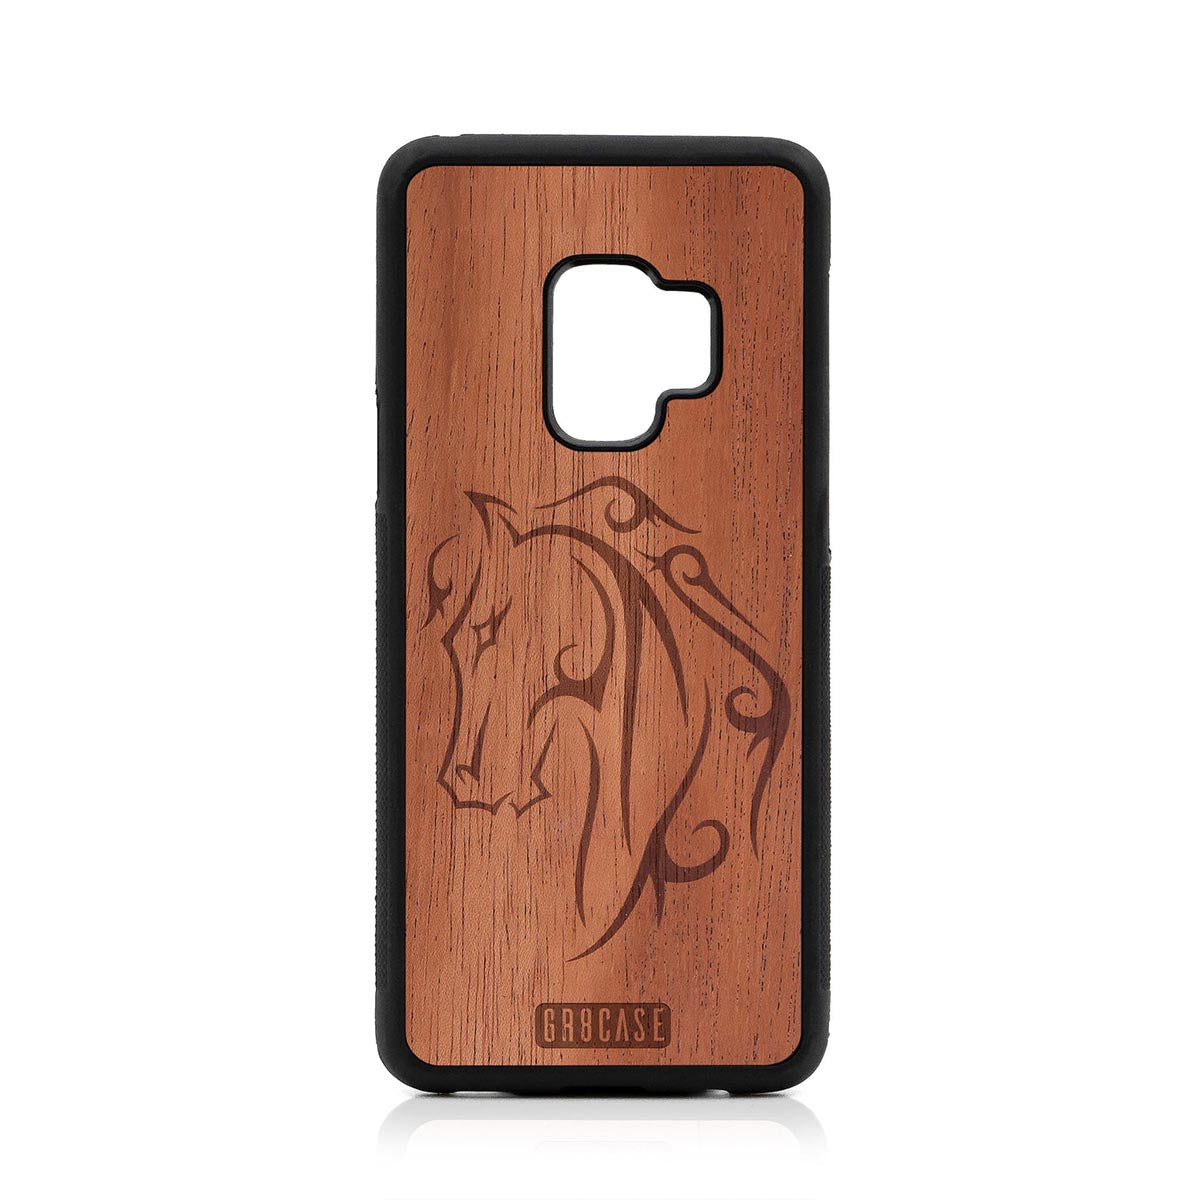 Horse Tattoo Design Wood Case Samsung Galaxy S9 by GR8CASE